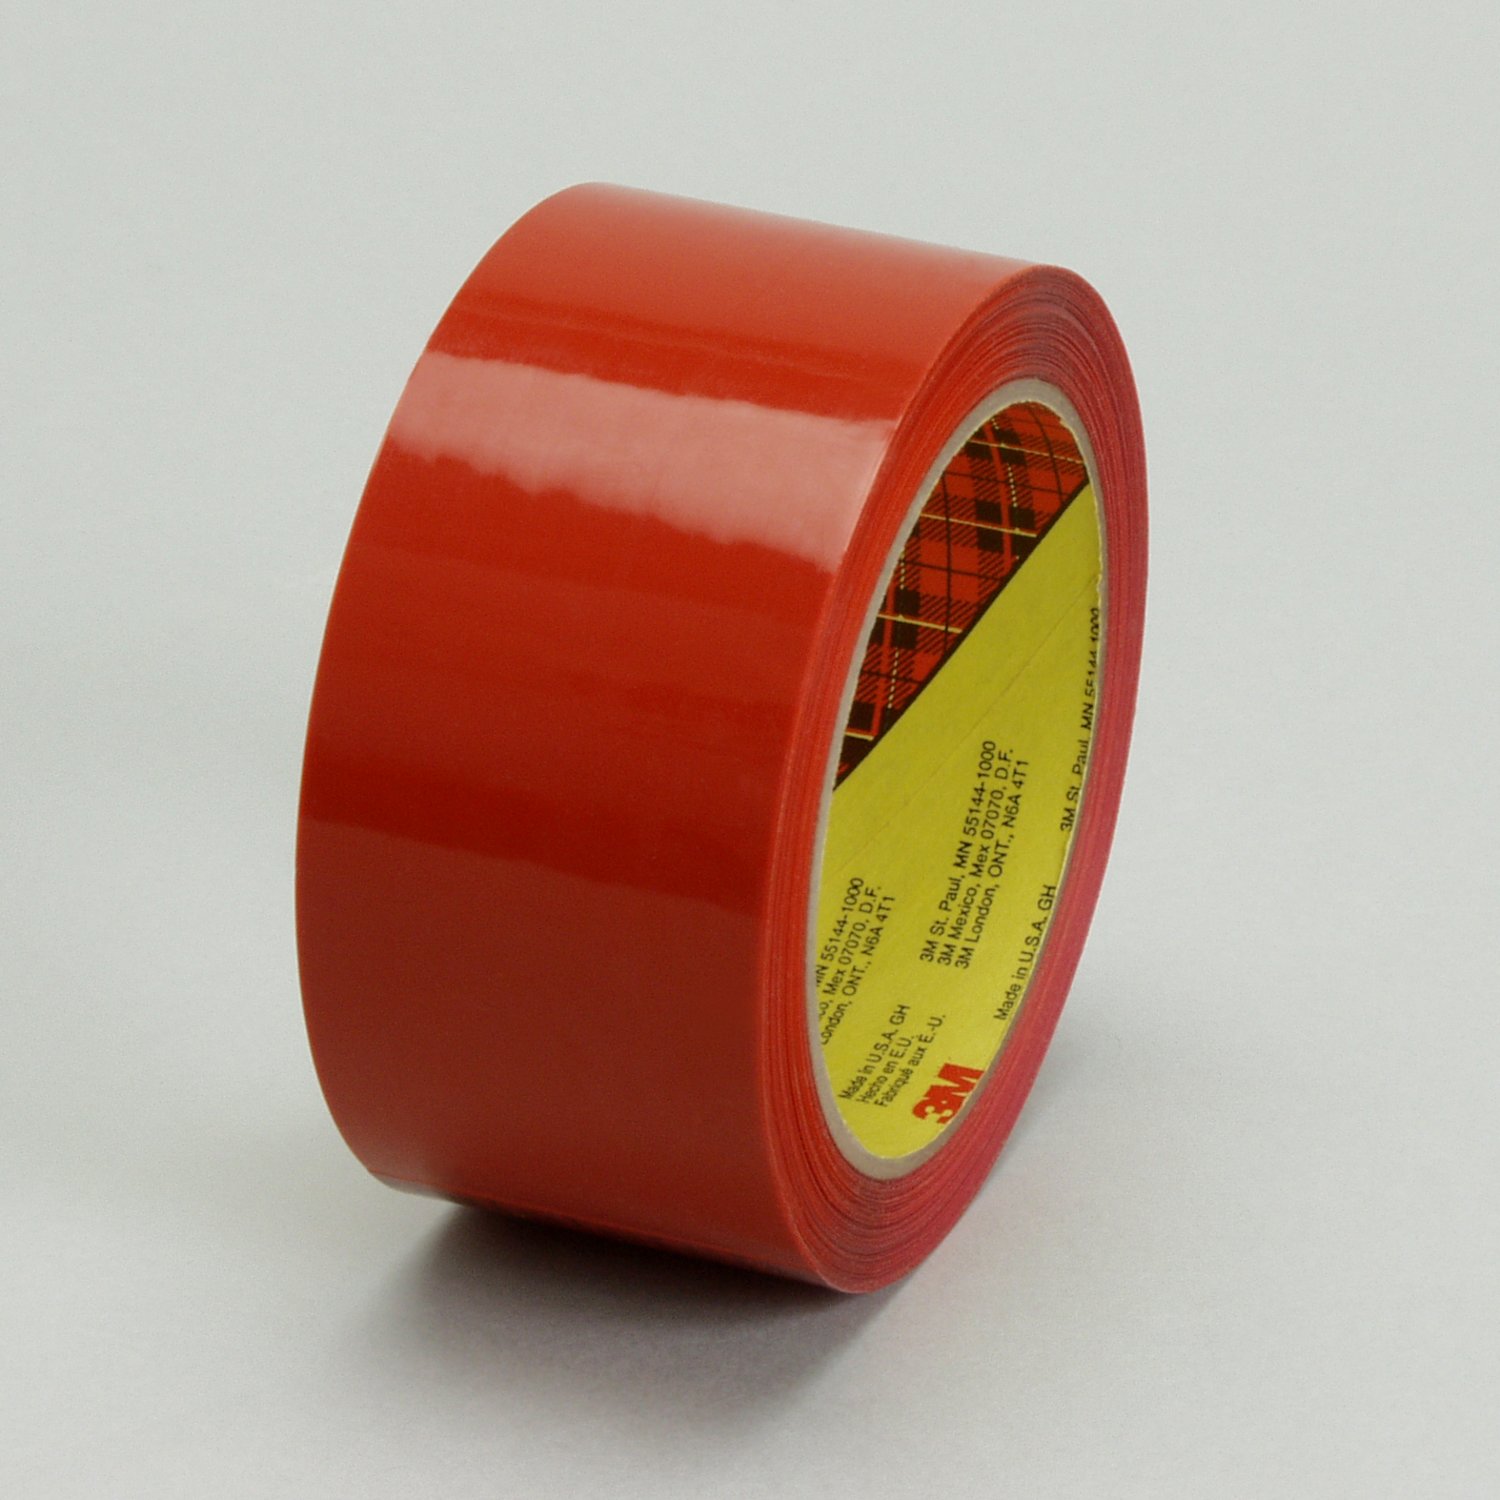 00048011537979, Scotch Box Sealing Tape 373, Orange, 72 mm x 914 m, 4/Case, Aircraft products, box-sealing-tapes